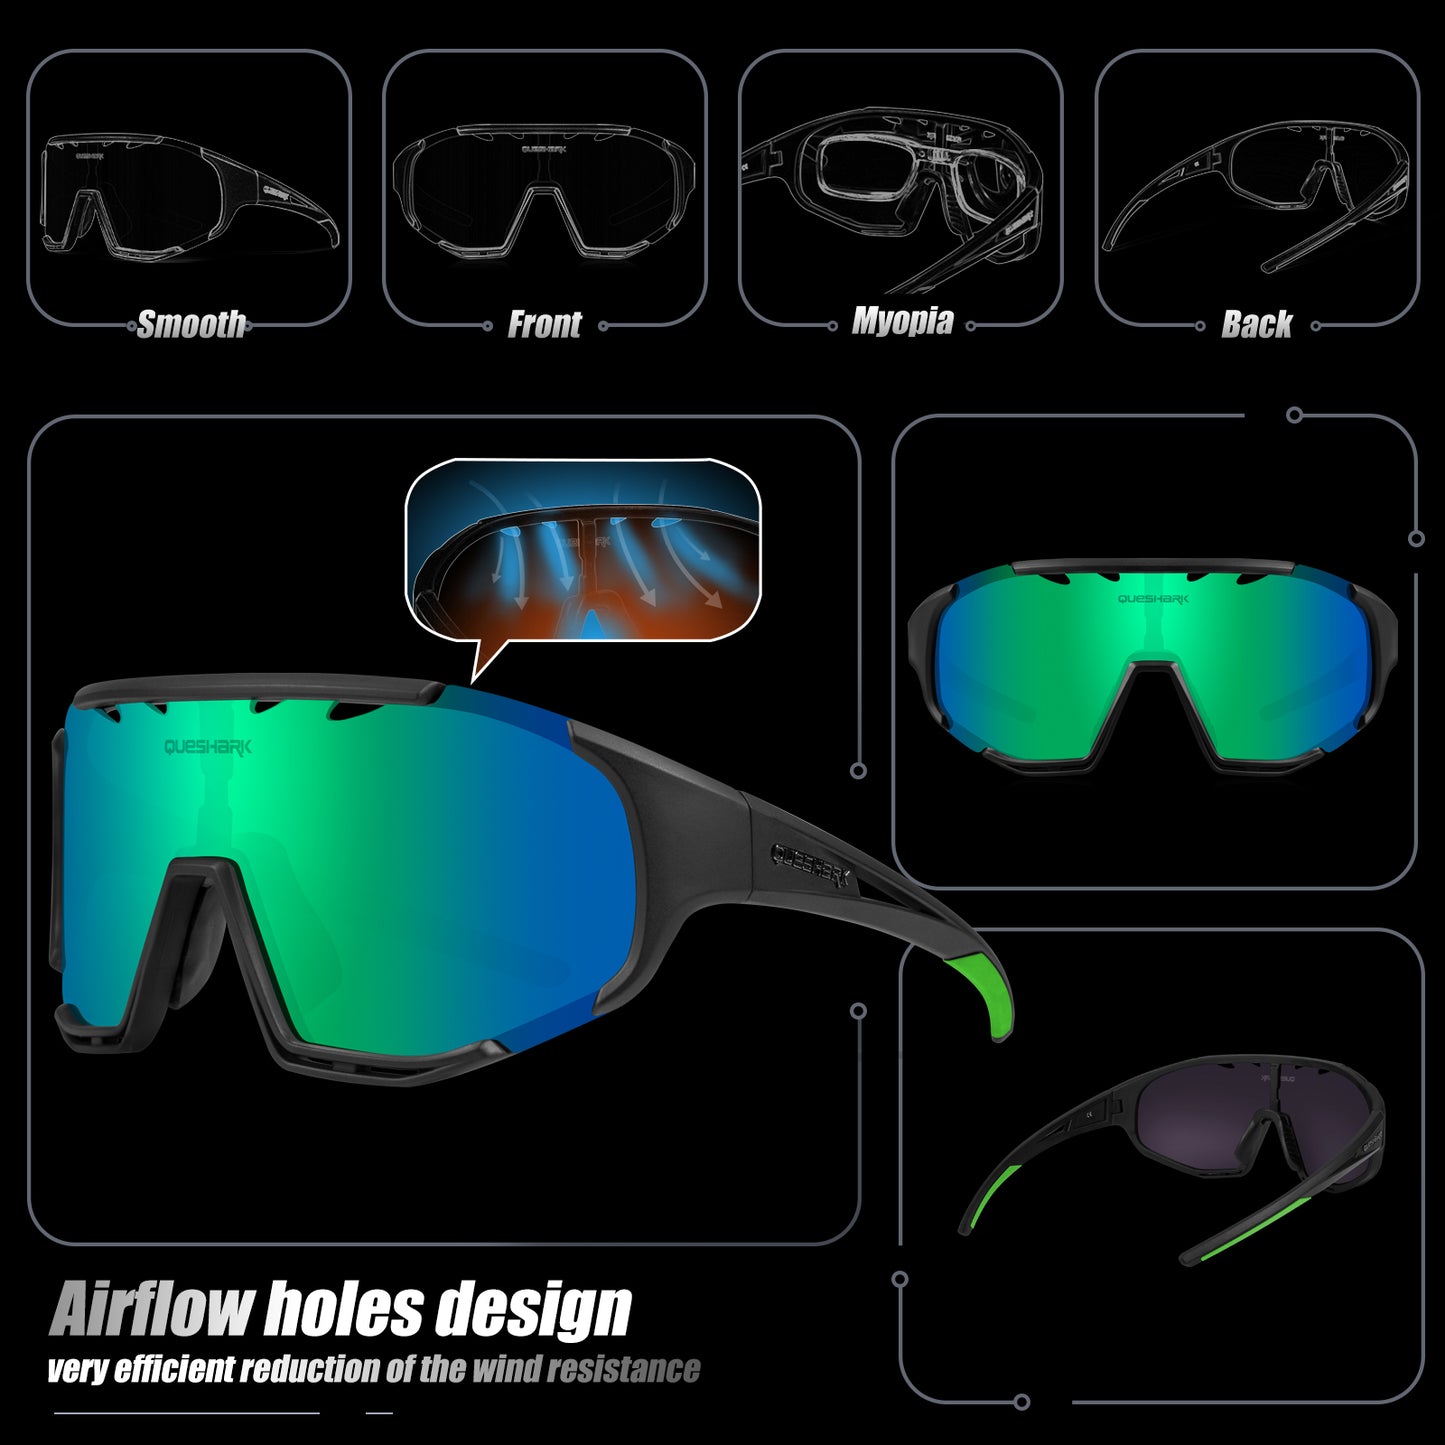 <transcy>QE55 Gafas de sol polarizadas negras y verdes Gafas de ciclismo Hombres Mujeres Gafas de conducción de gran tamaño con 5 lentes</transcy>